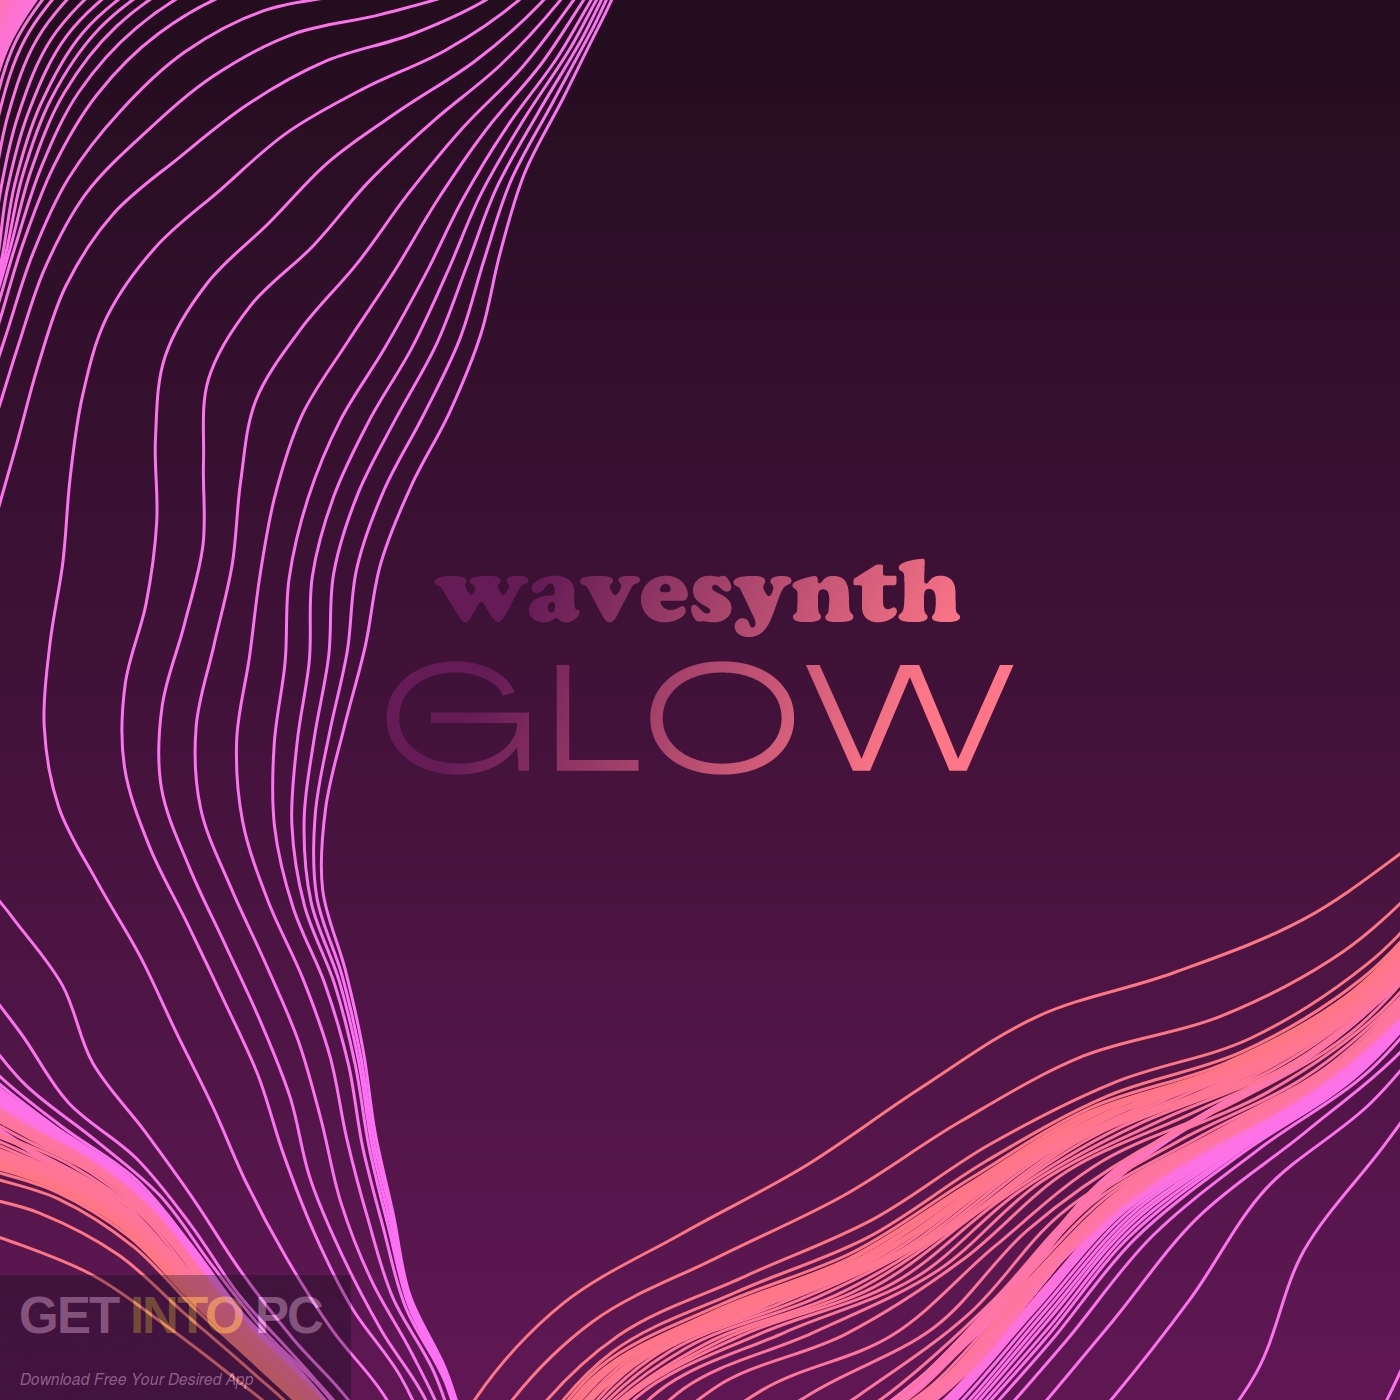 Karanyi-Sounds-Wavesynth-Glow-KONTAKT-Free-Download-GetintoPC.com_.jpg